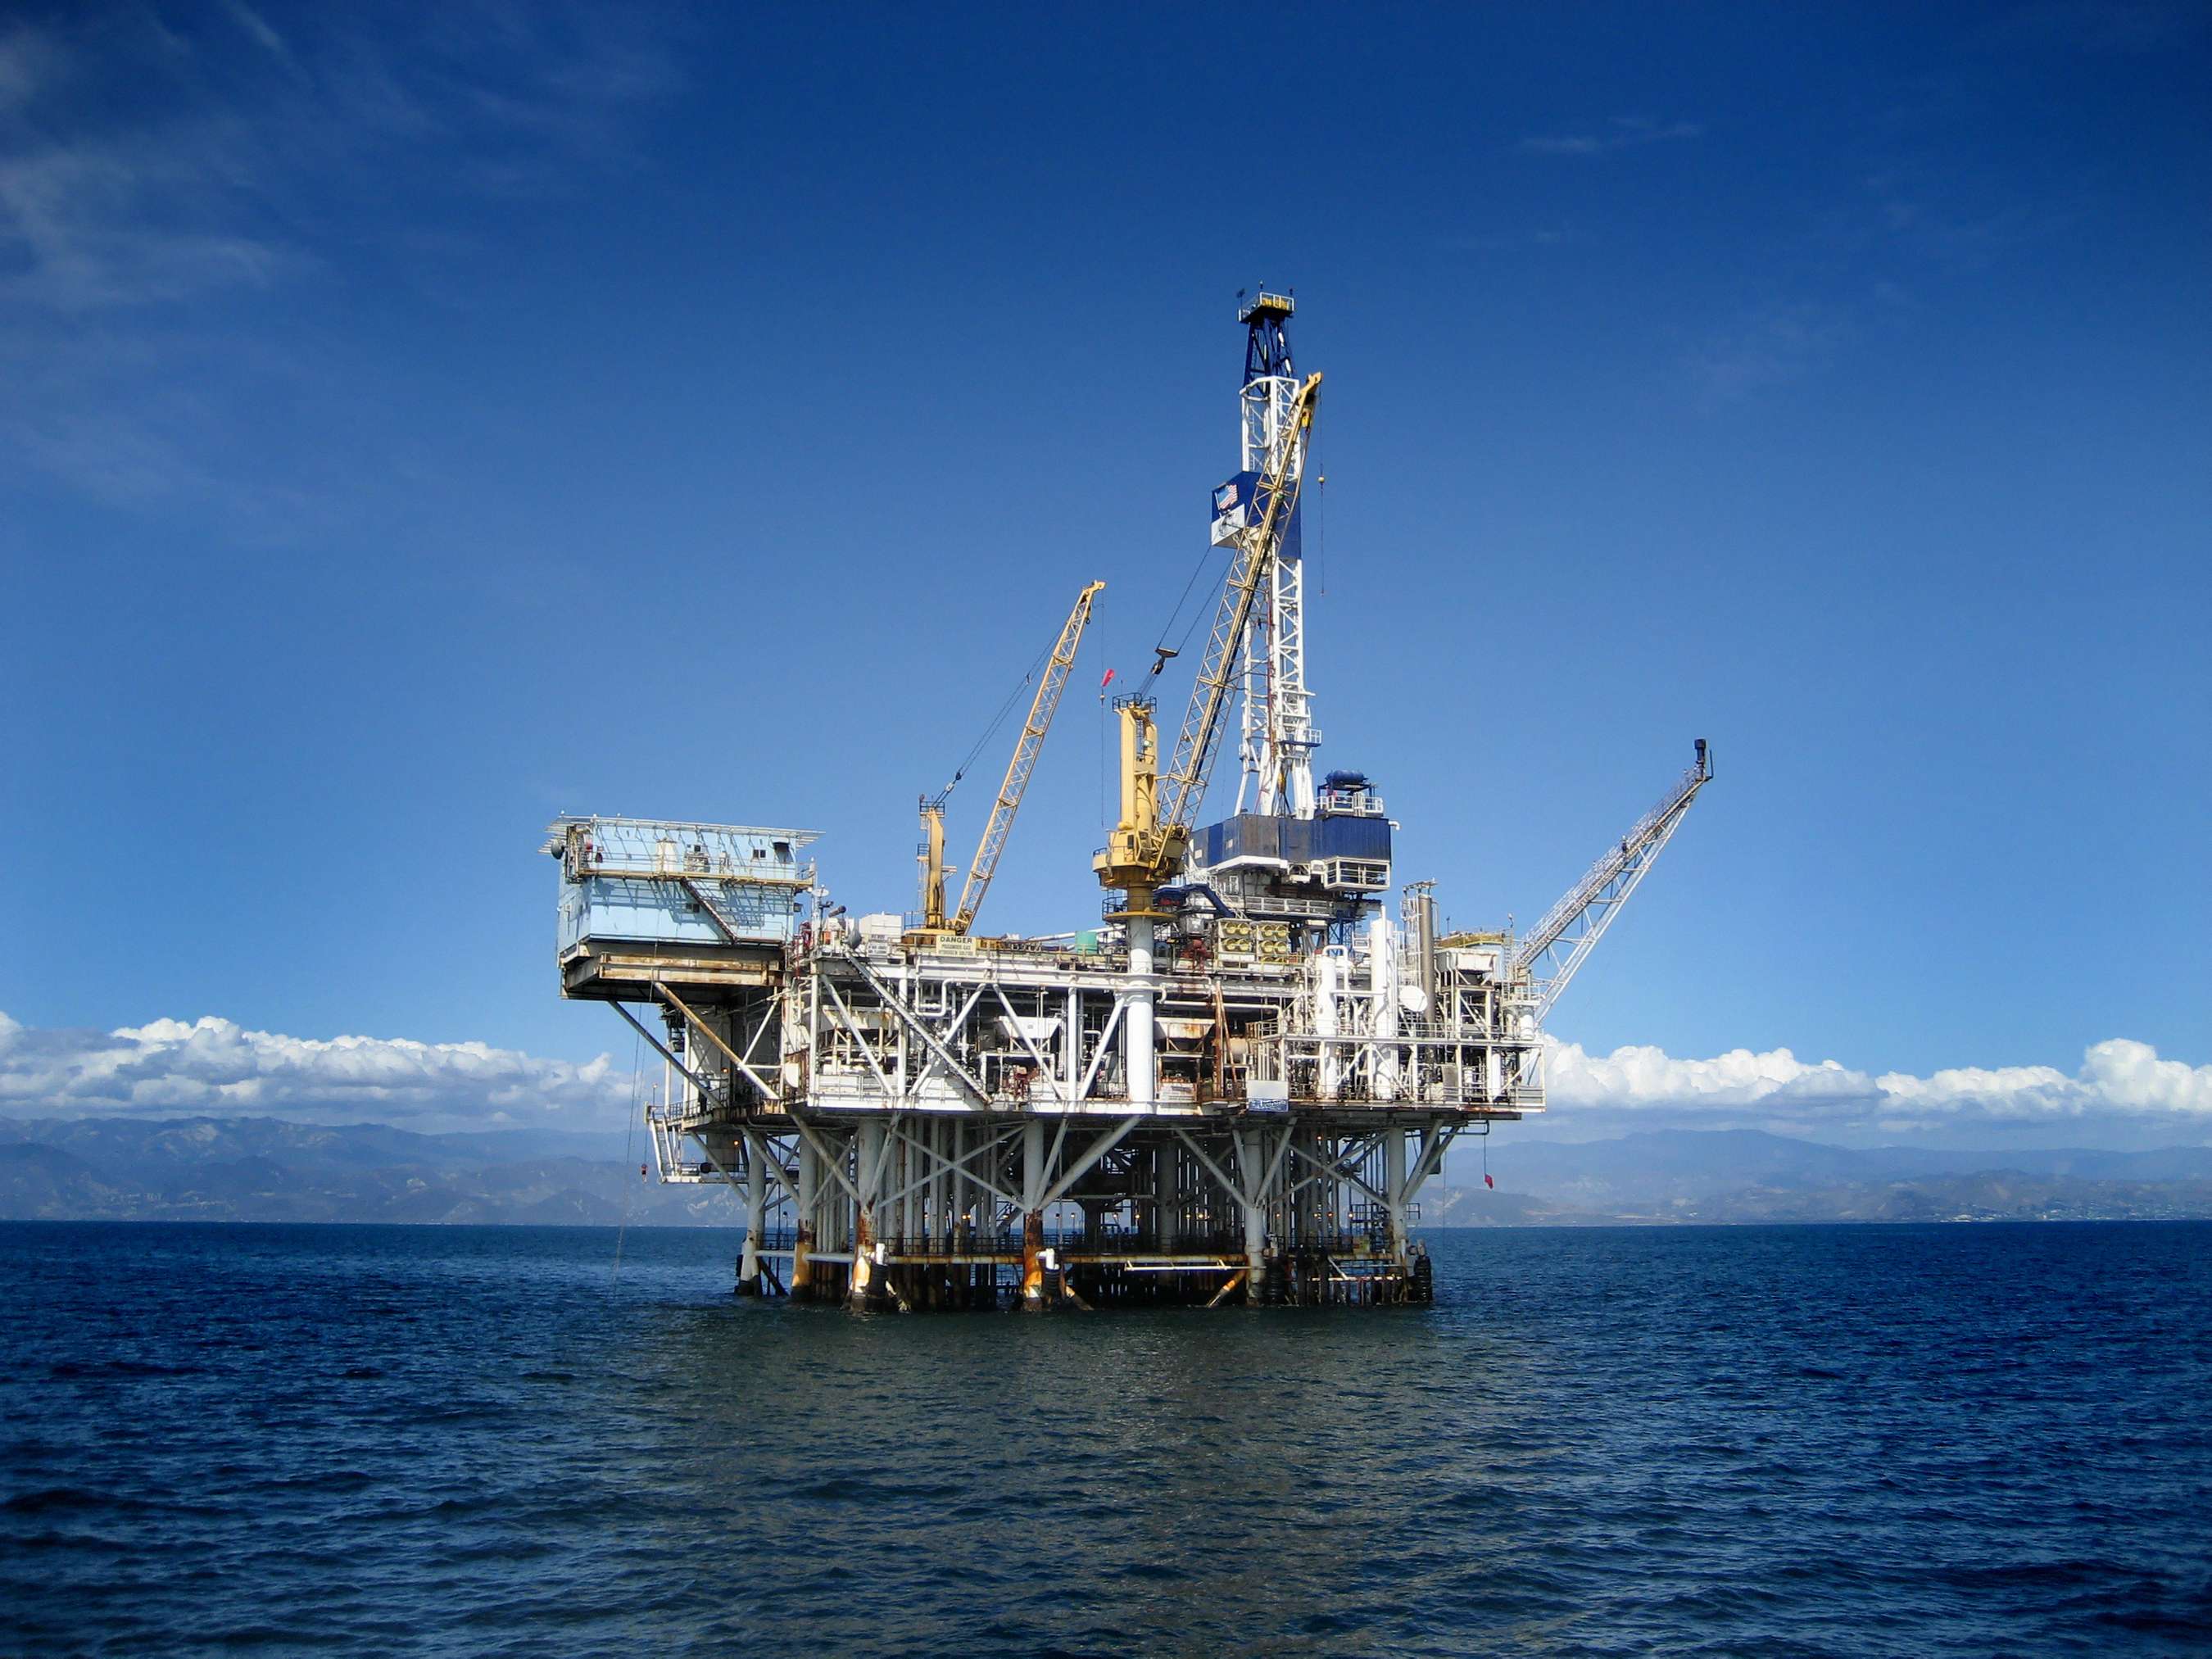 offshore oil rig drilling platform in California.